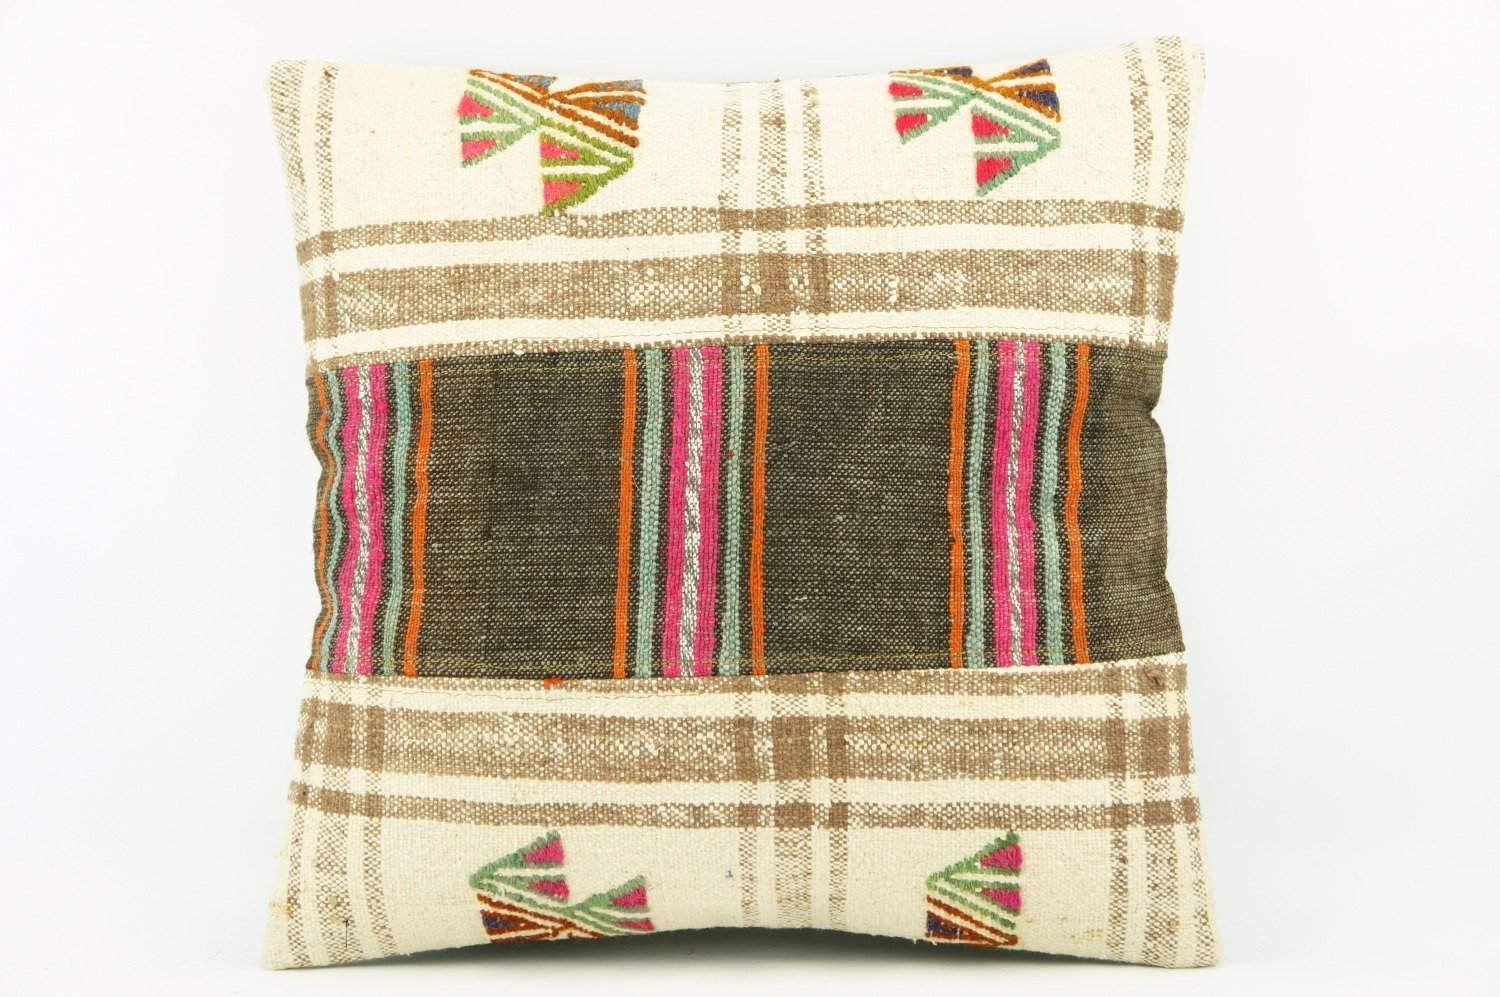 Kilim  pillow cover,  throw  pillow , ethnic decor,  Mid century style 2162 - kilimpillowstore
 - 1